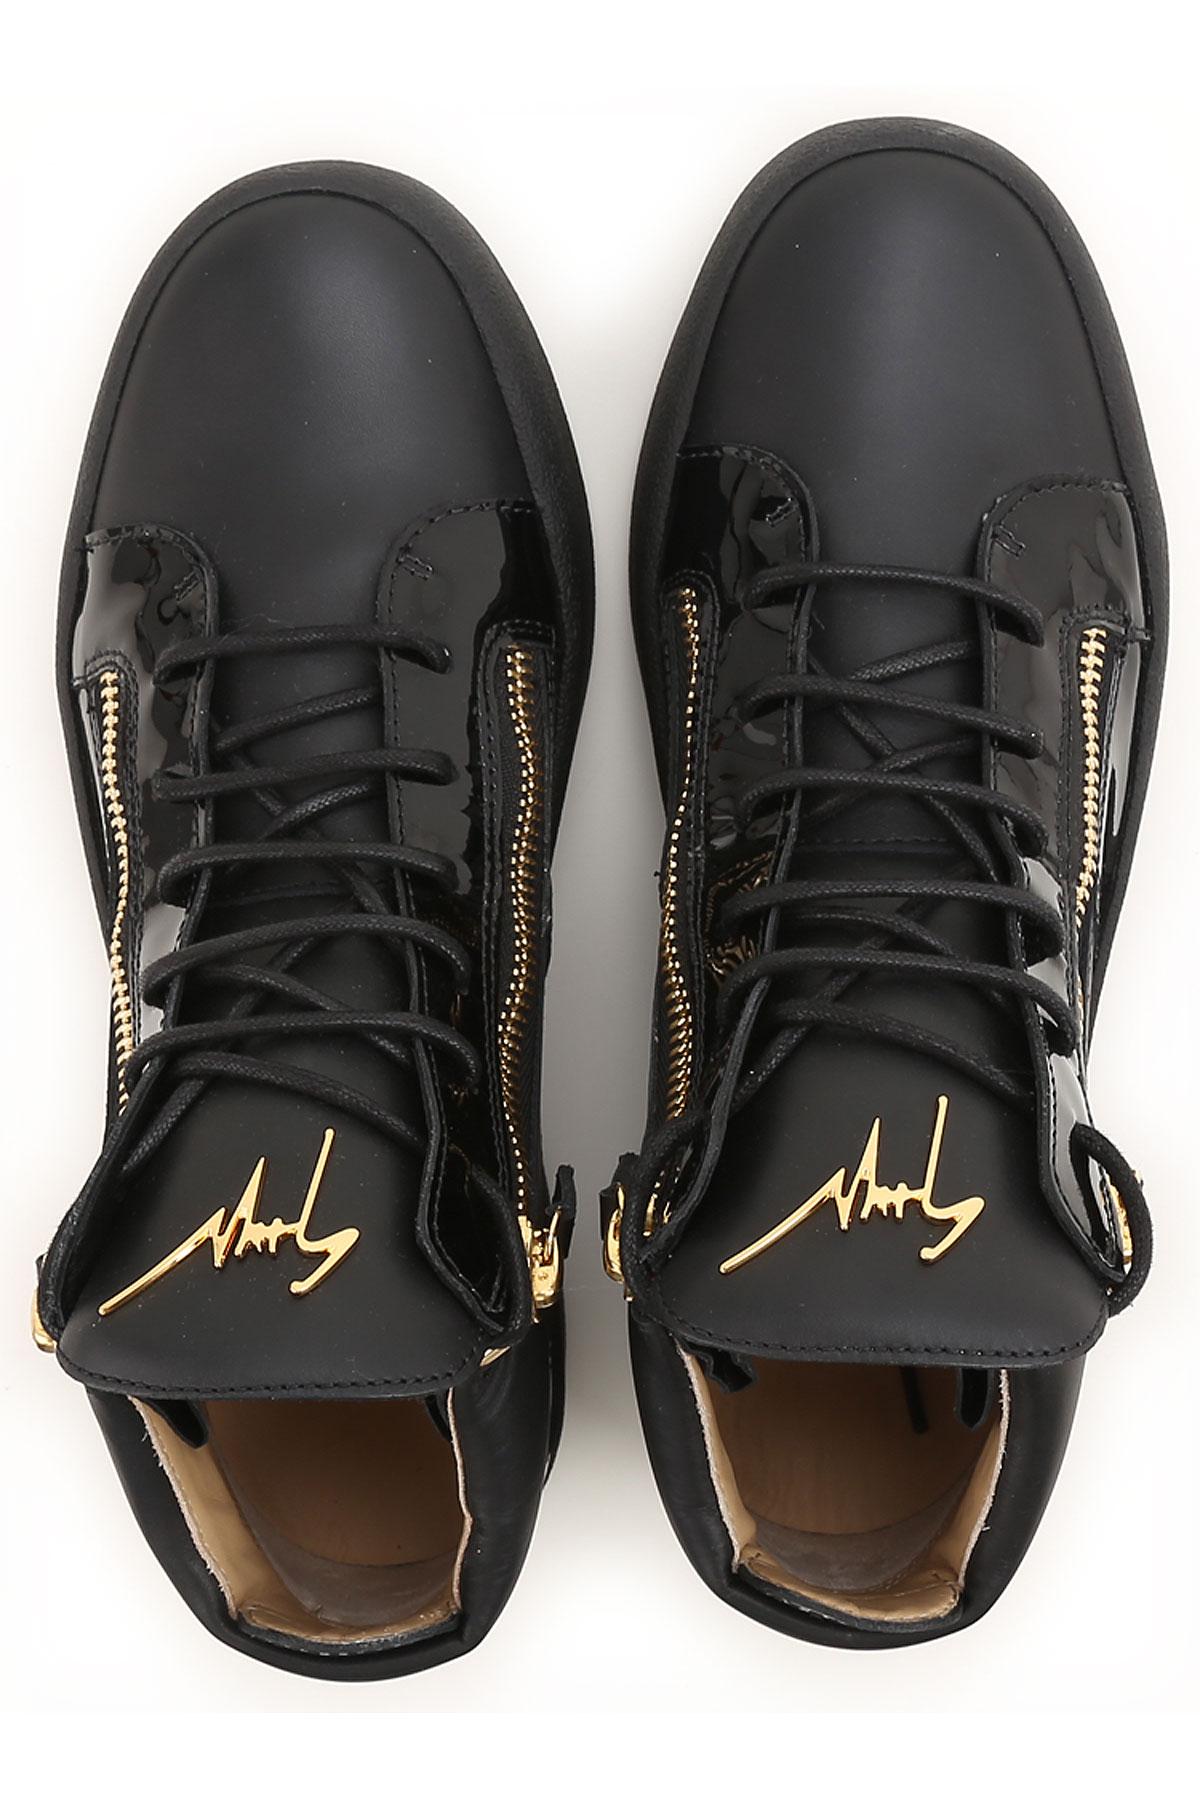 Giuseppe Zanotti Lace Sneakers For Men in Black for Men - Lyst